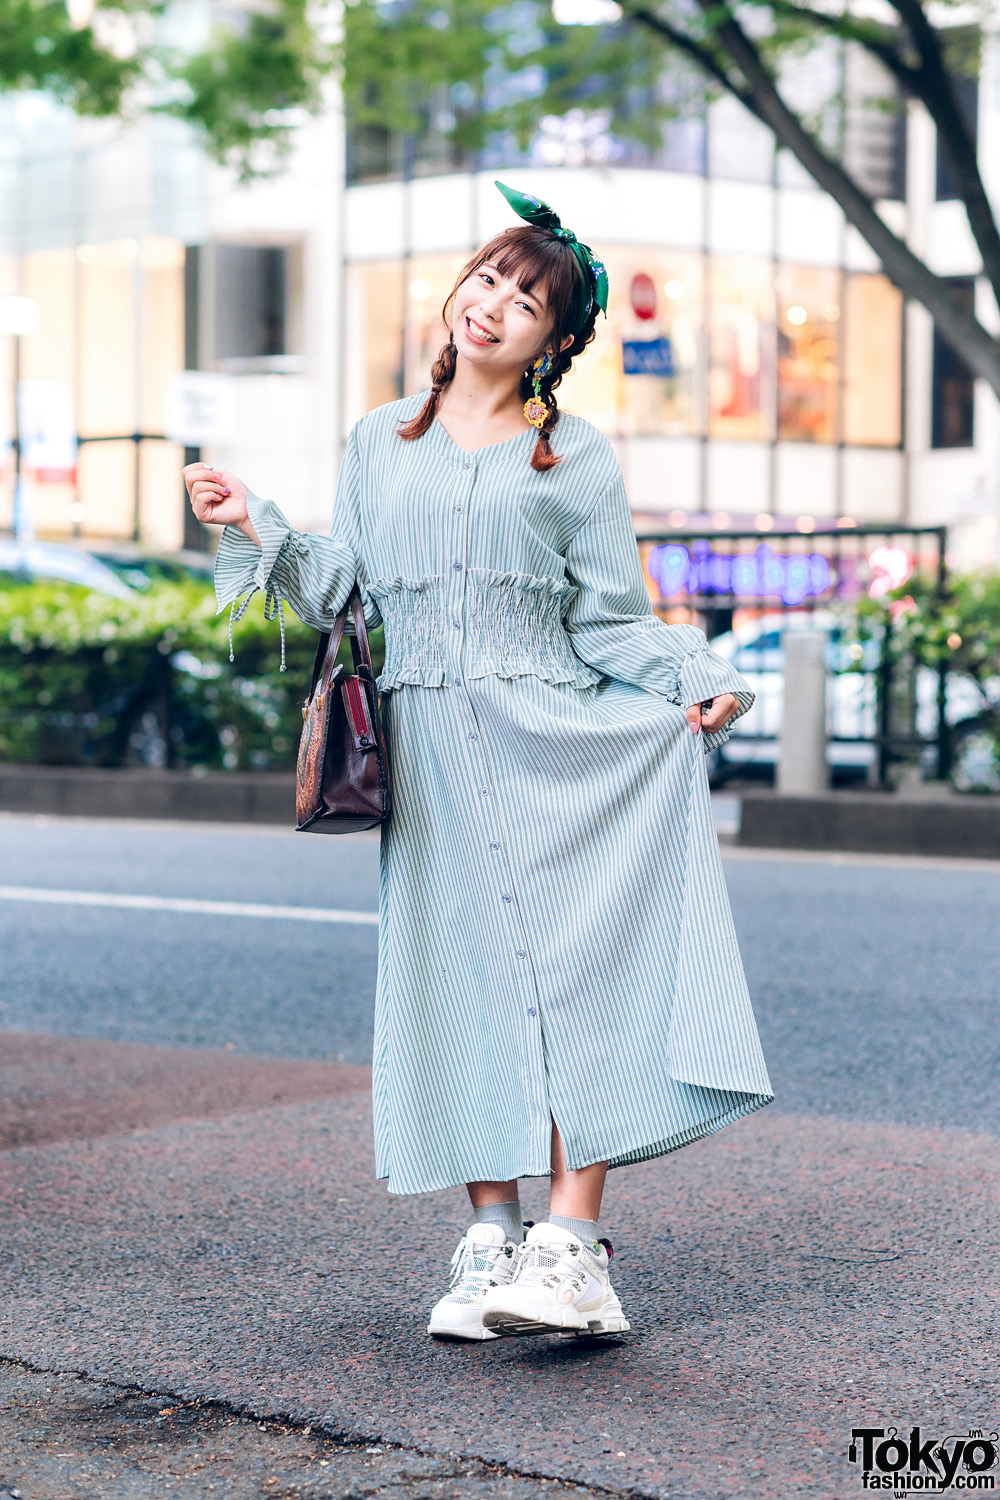 Vintage-Inspired Tokyo Street Style w/ Headscarf, Striped Dress, Handmade Earrings, Vintage Handbag & Gucci Chunky Sneakers